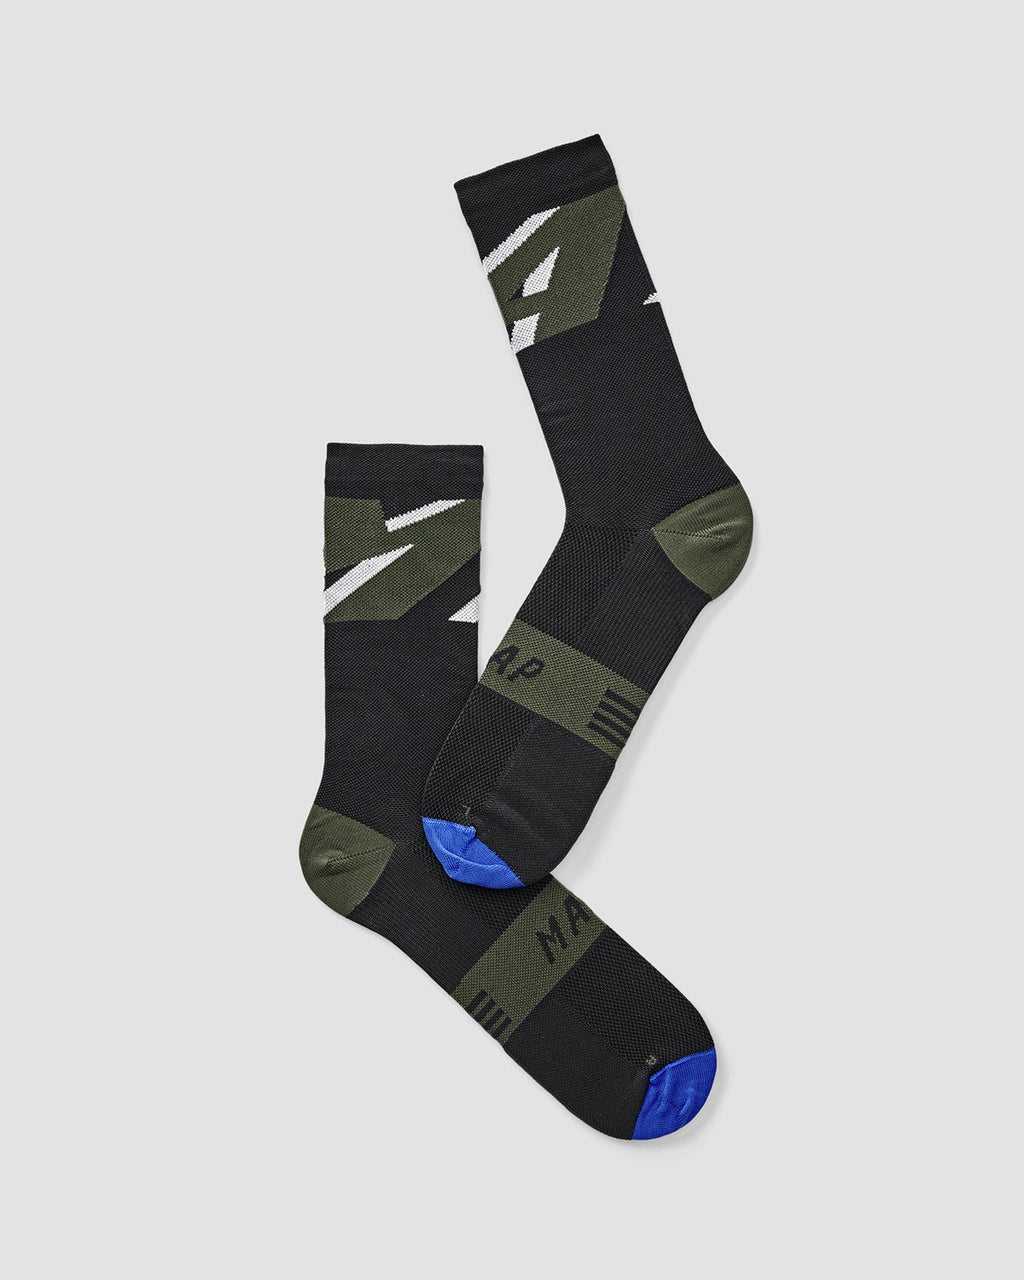 Evolce 3D Sock - Black